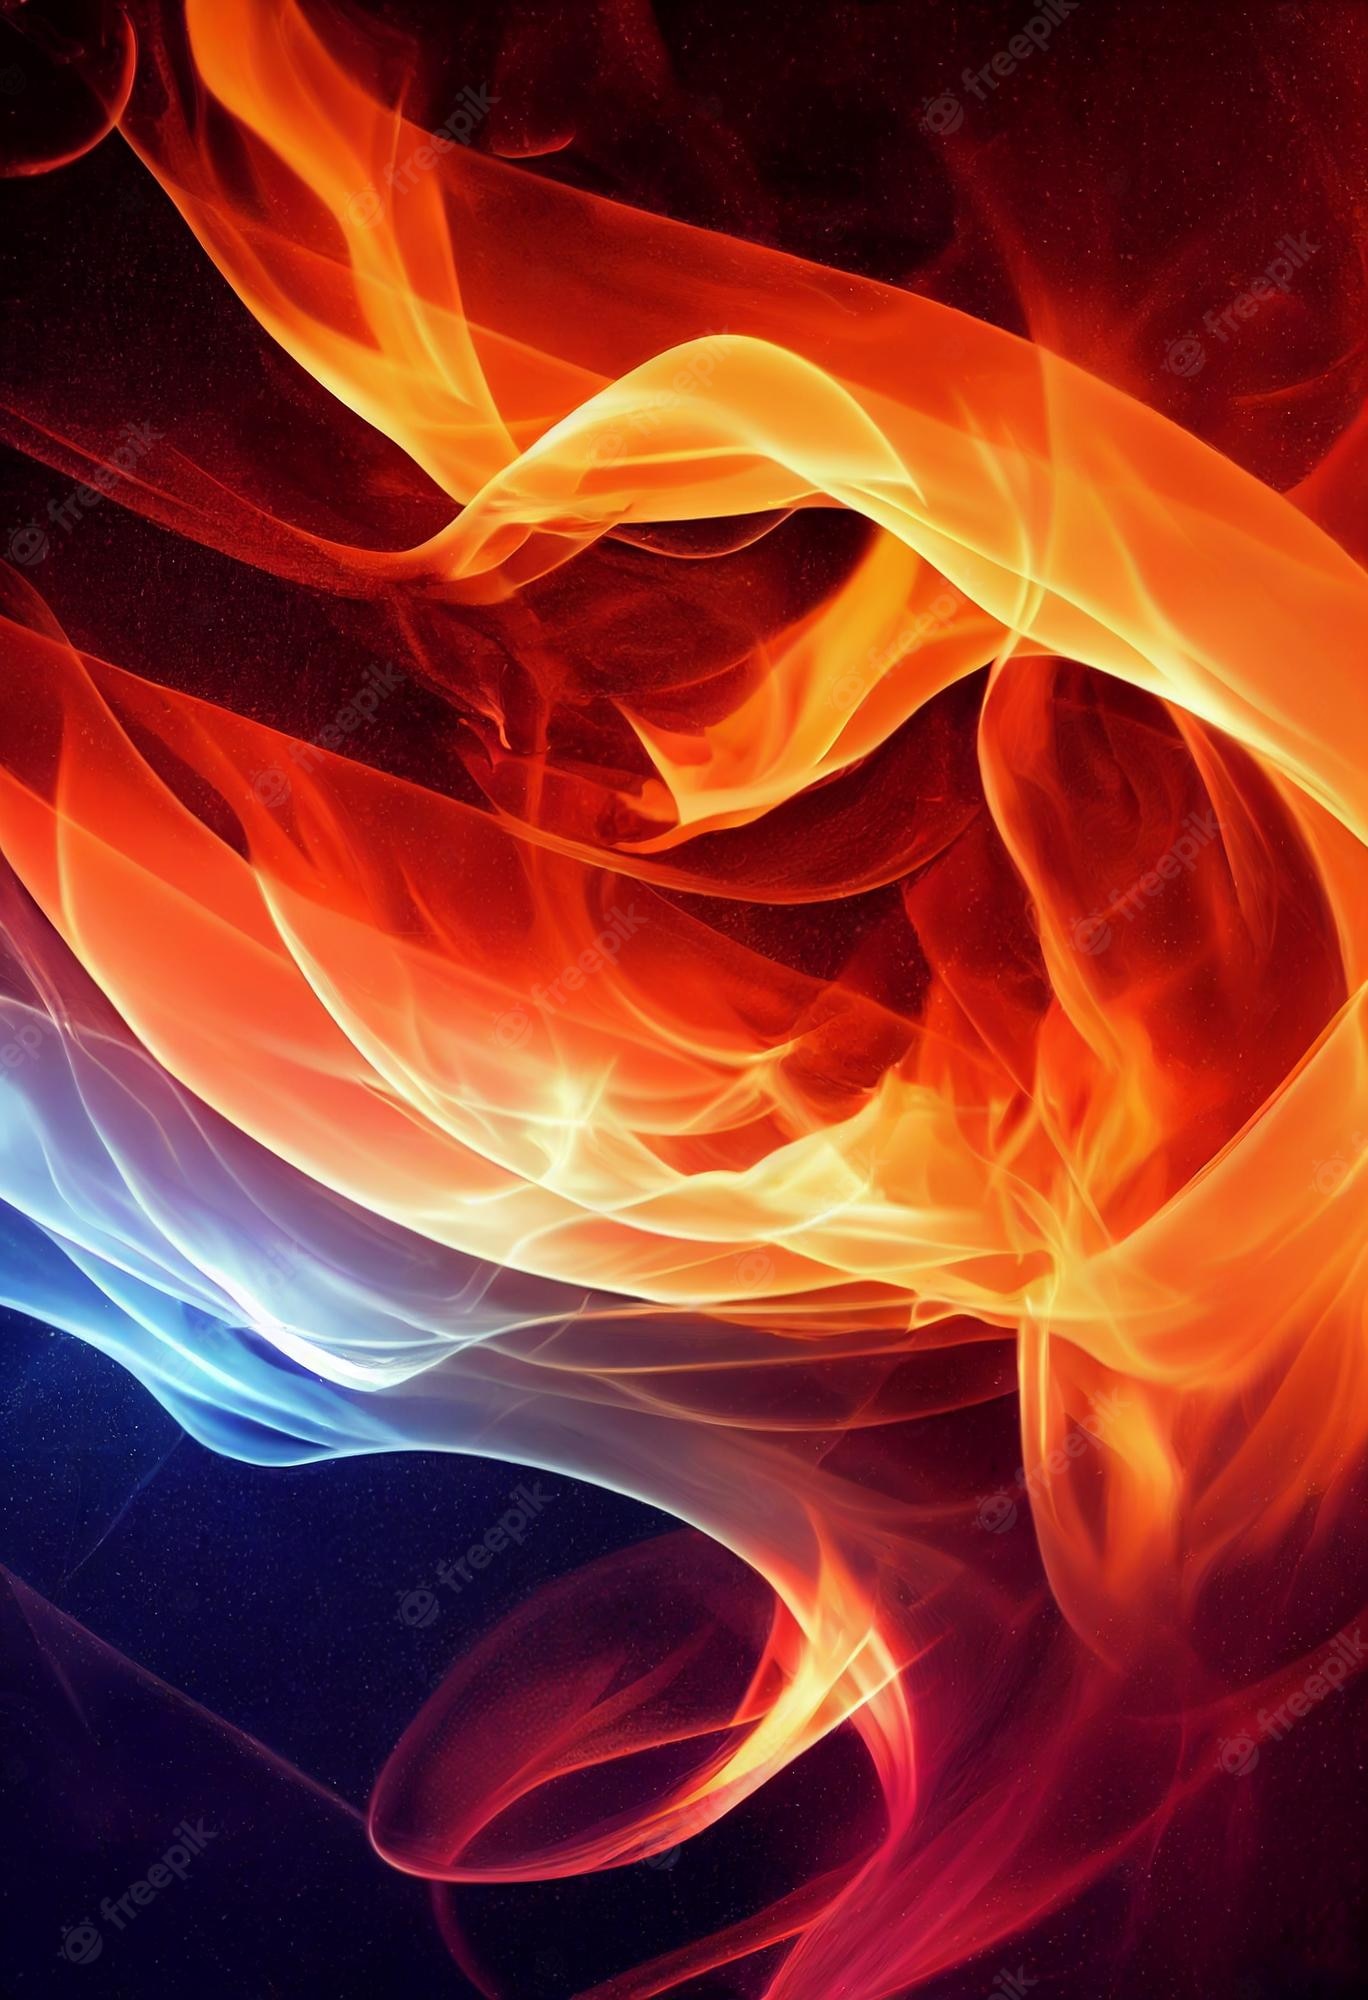 Flame Wallpaper Image